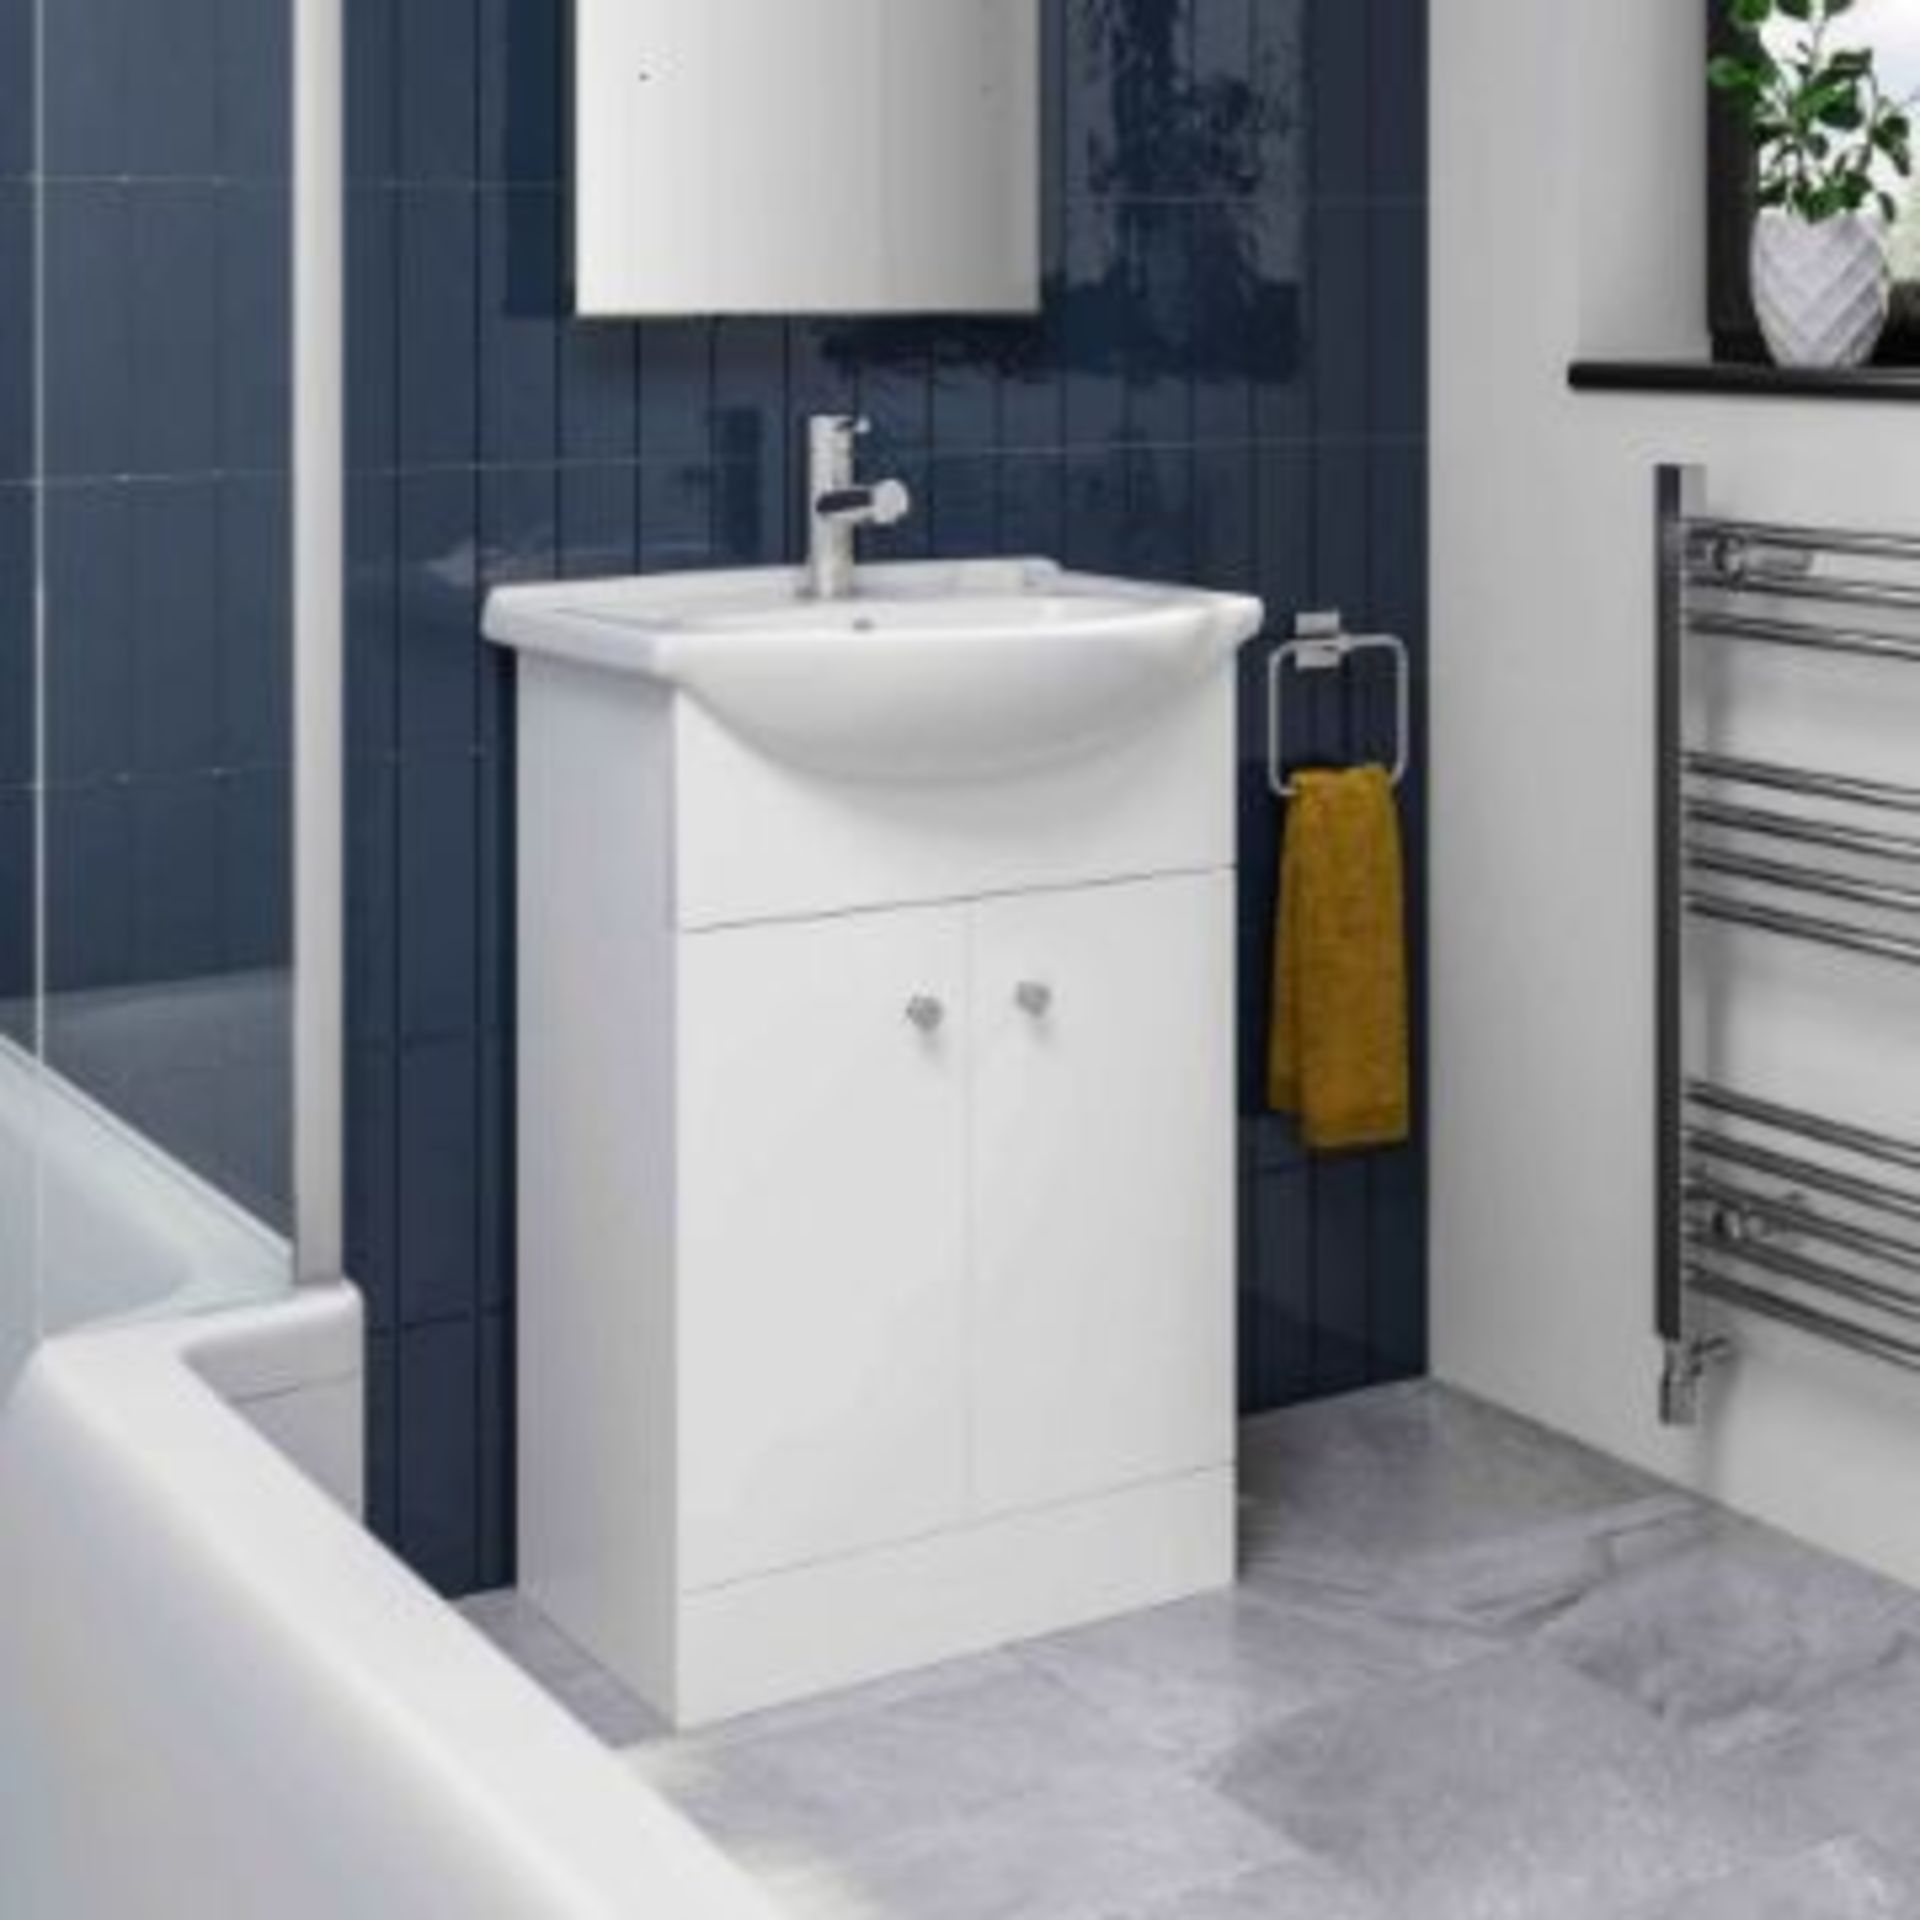 New & Boxed 550mm Quartz Basin Sink Vanity Unit Floor Standing White.RRP £399.99.Comes Compl...